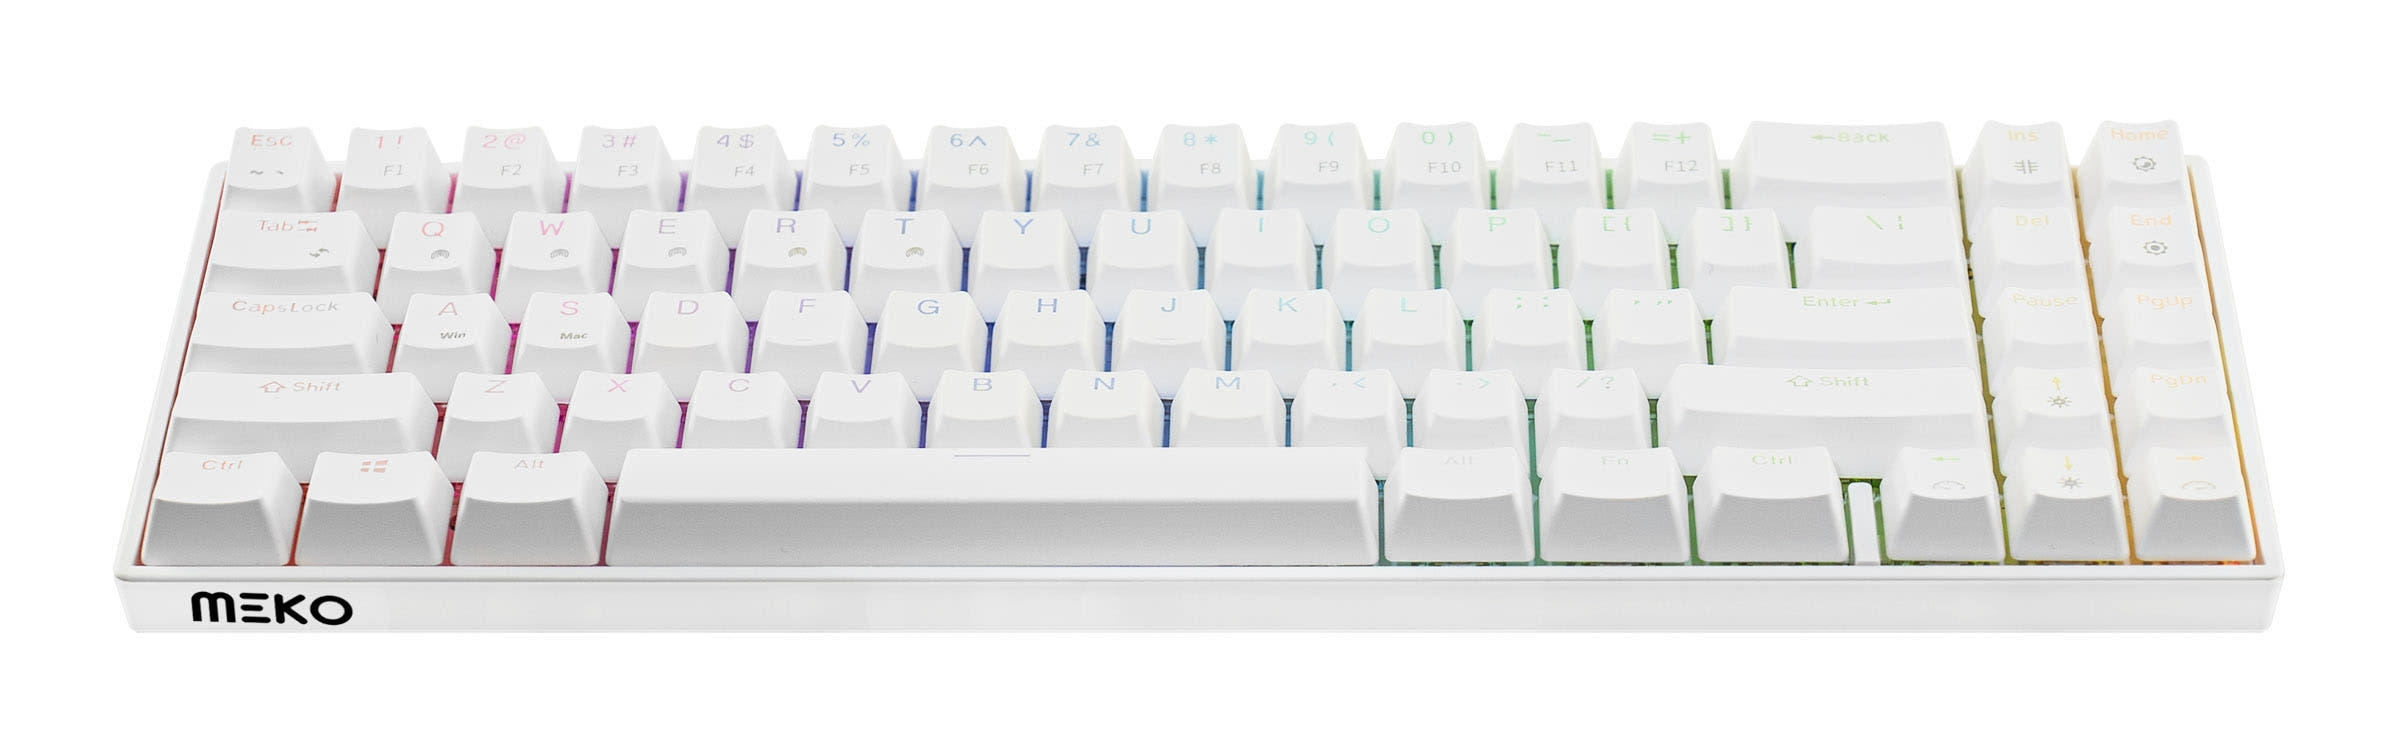 Meko Push White 65% Hotswap Bluetooth RGB Double Shot ABS Mechanical Keyboard